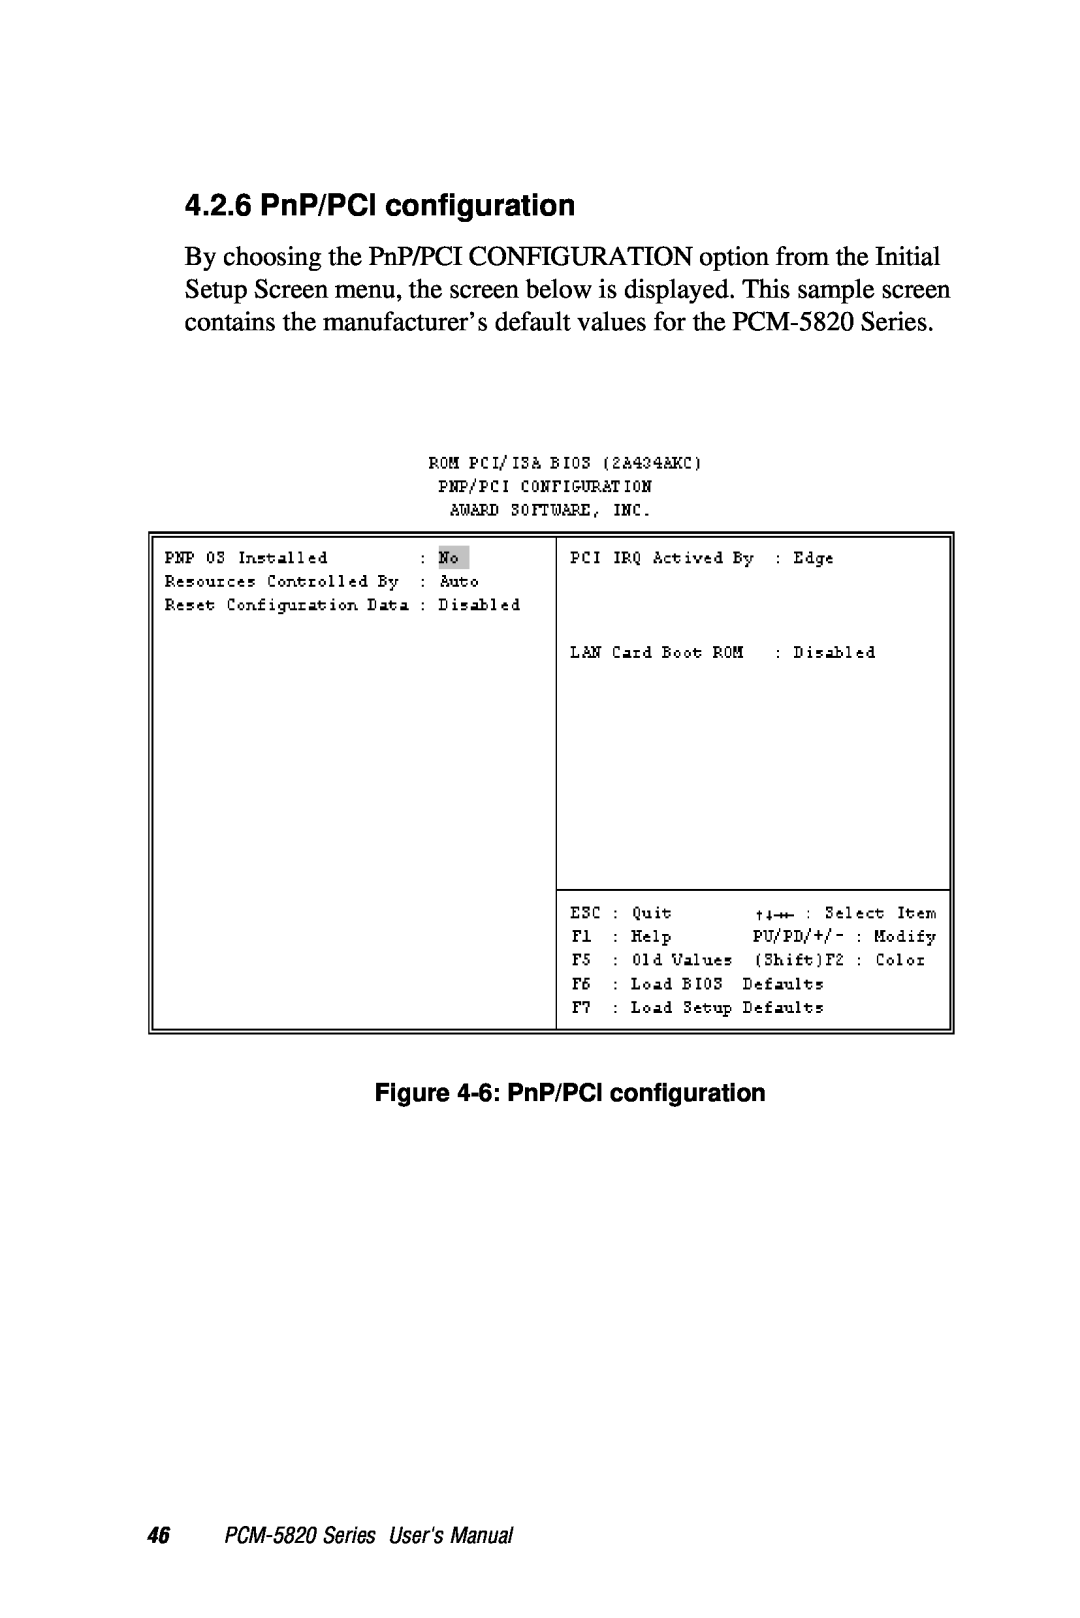 AMD manual 4.2.6 PnP/PCI configuration, PCM-5820 Series Users Manual 